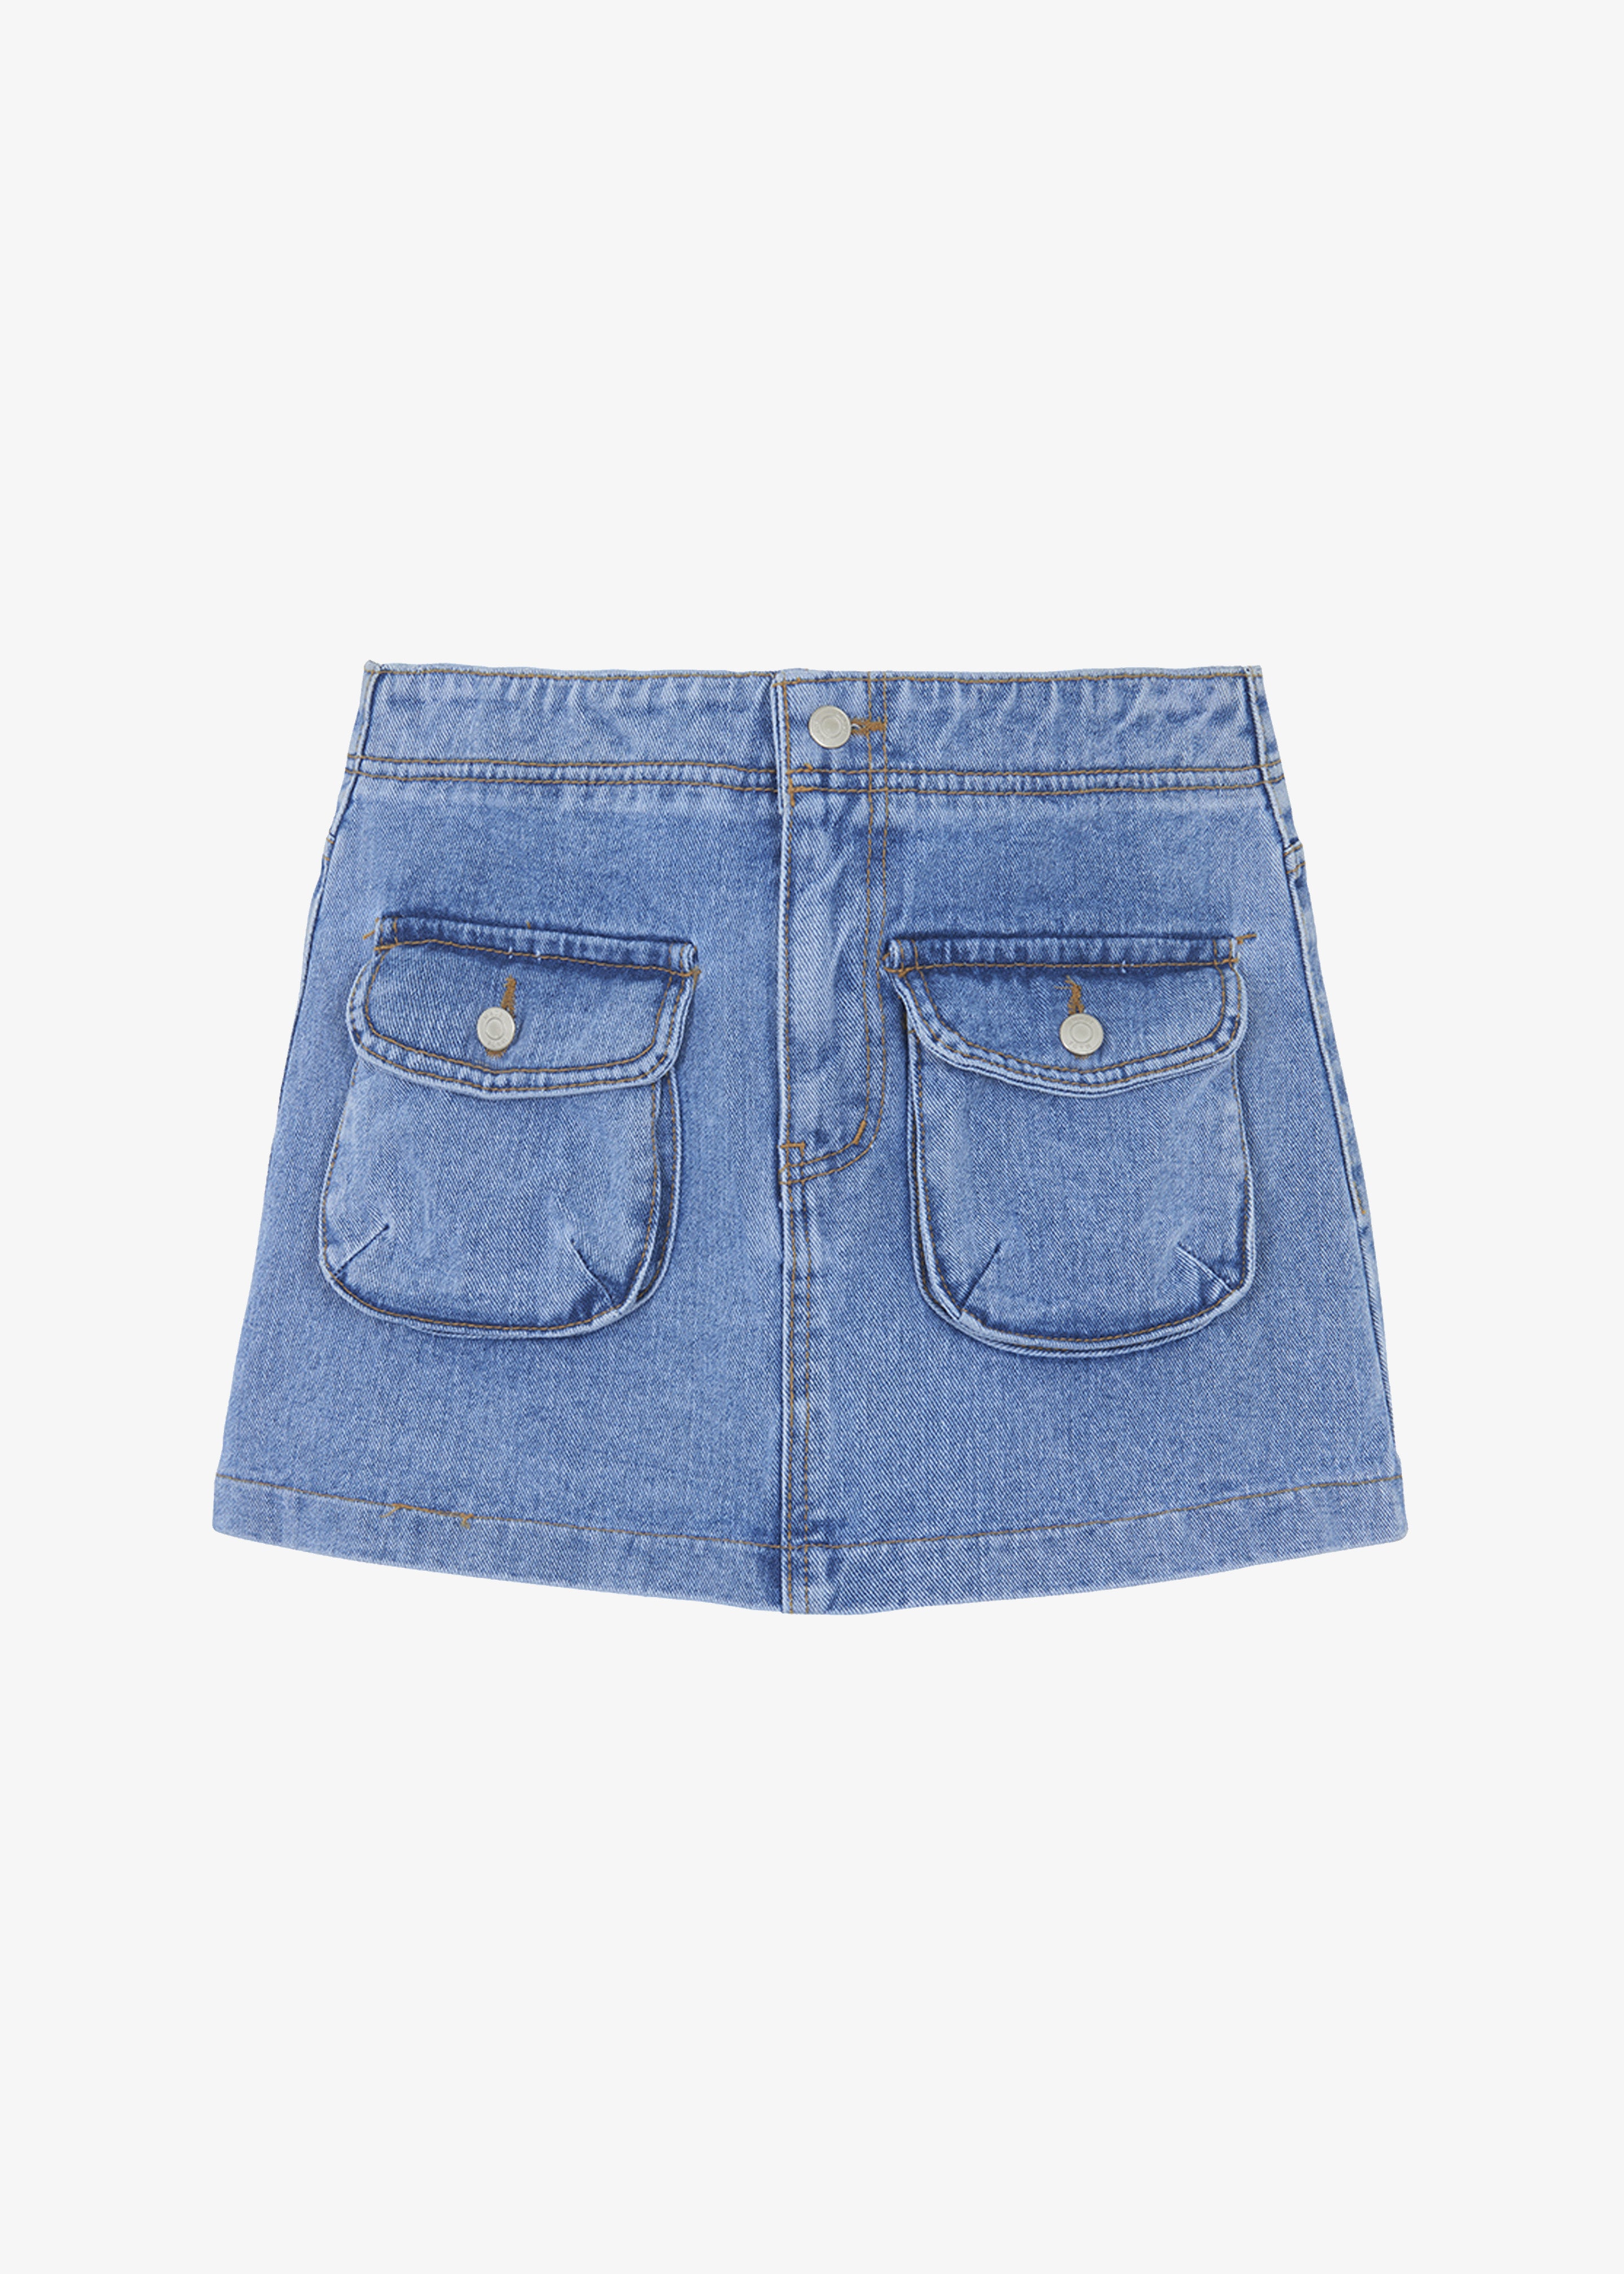 Thela Pocket Denim Skirt - Blue Wash - 8